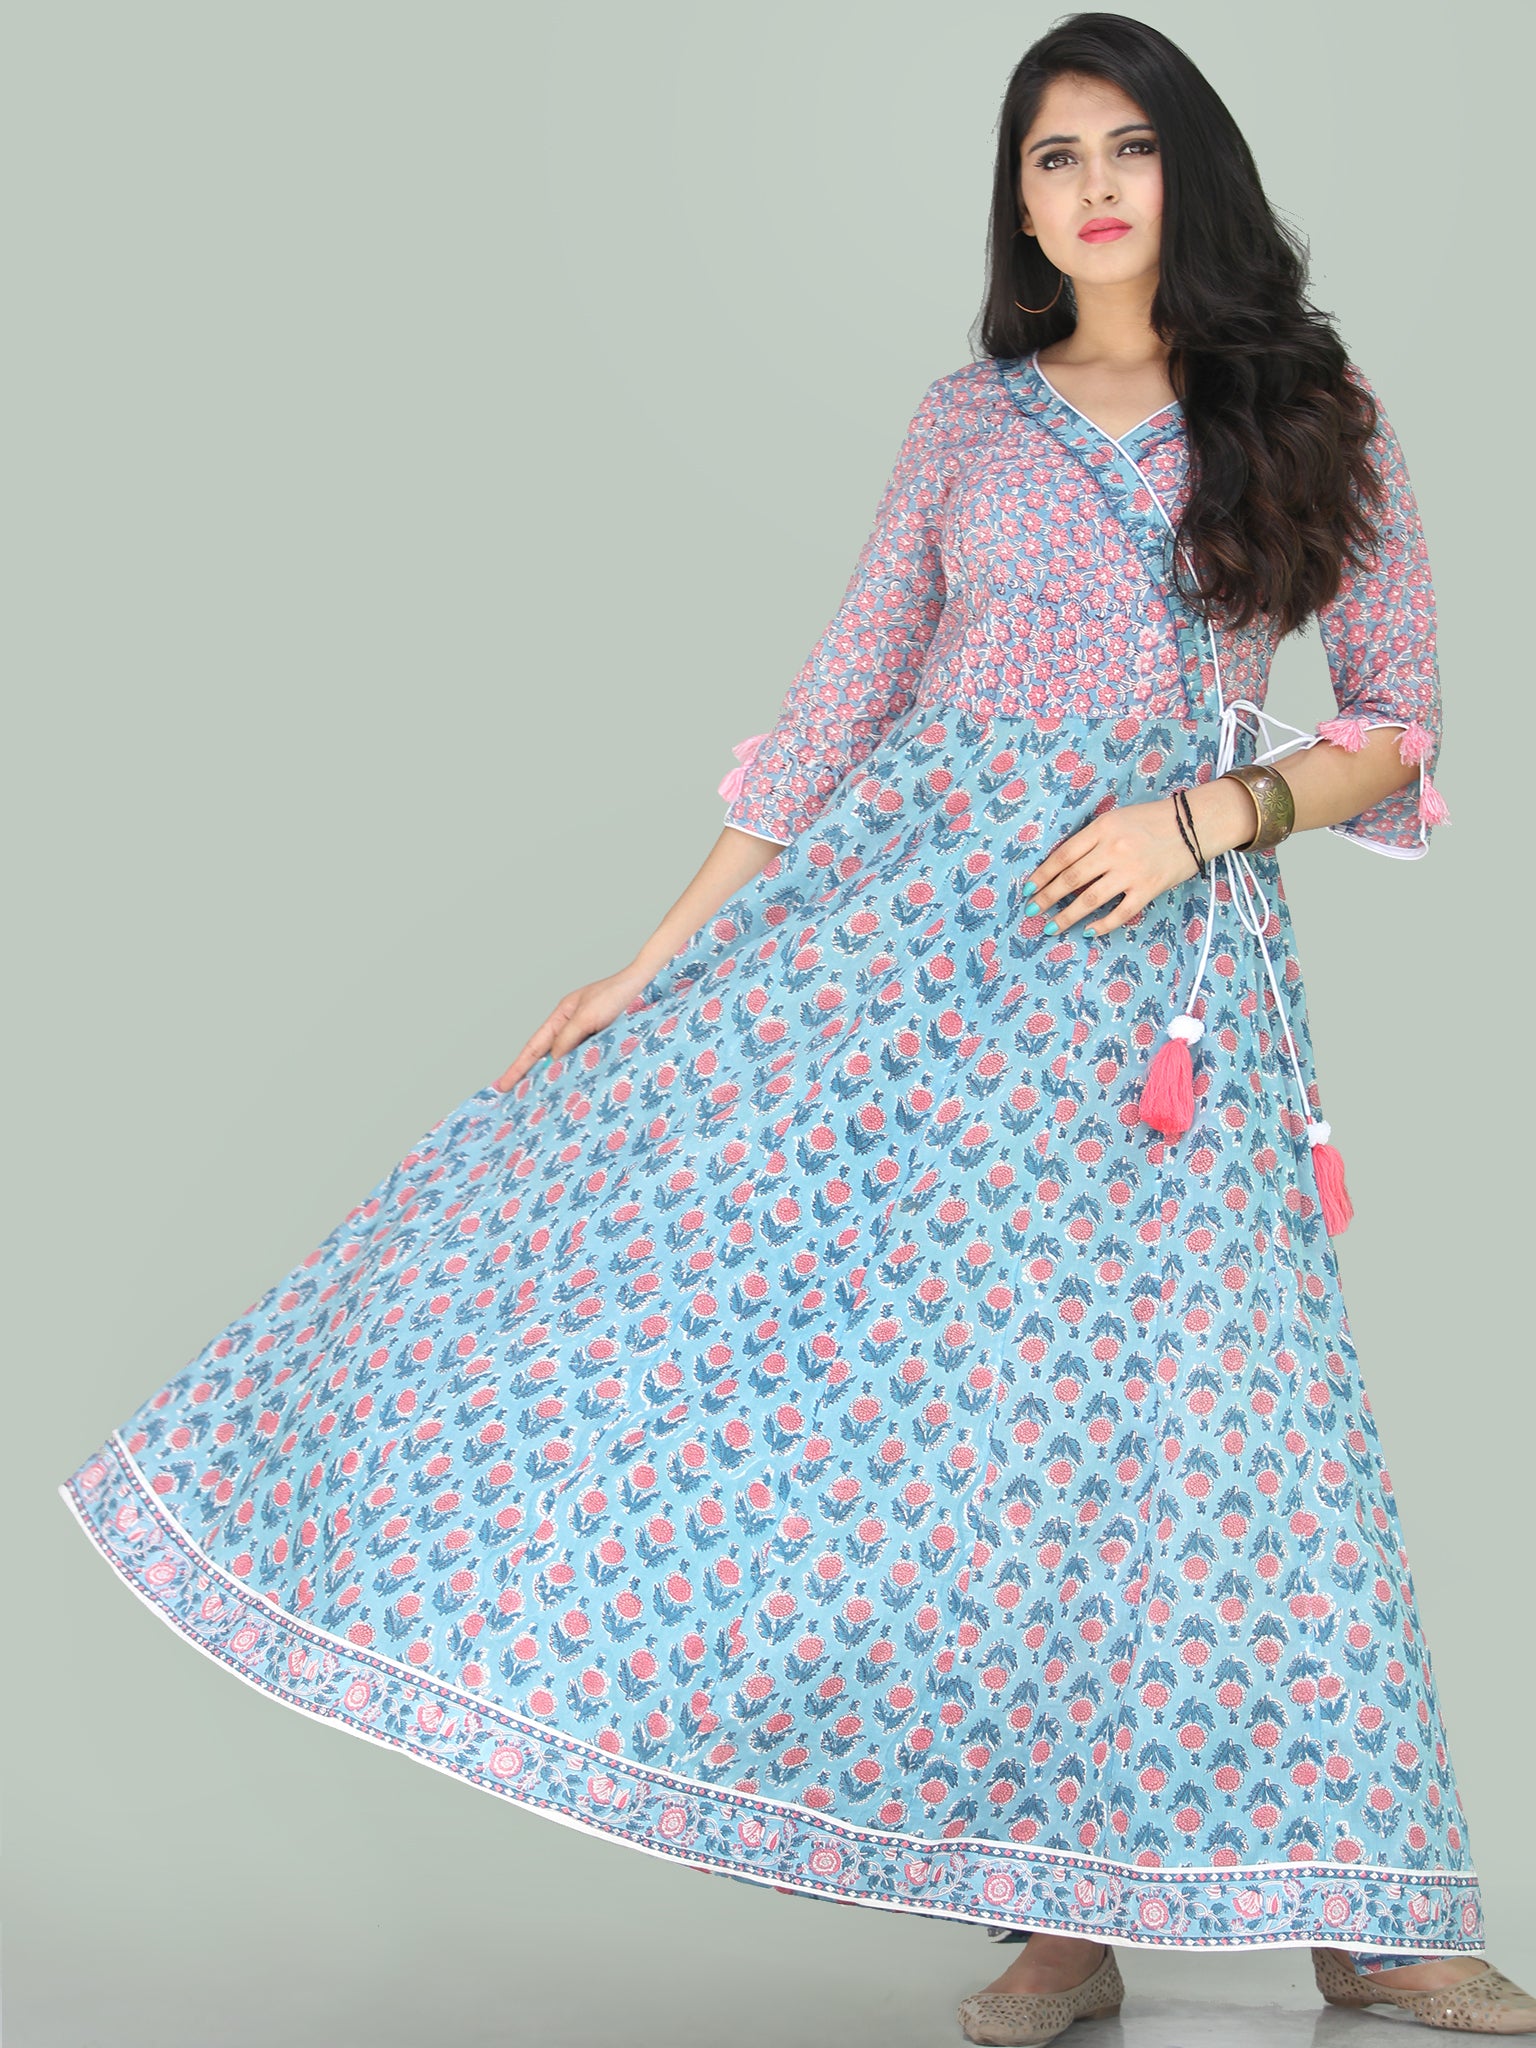 Gulzar Turfa - Hand Block Printed Angrakha Long Dress - D411F2223 ...